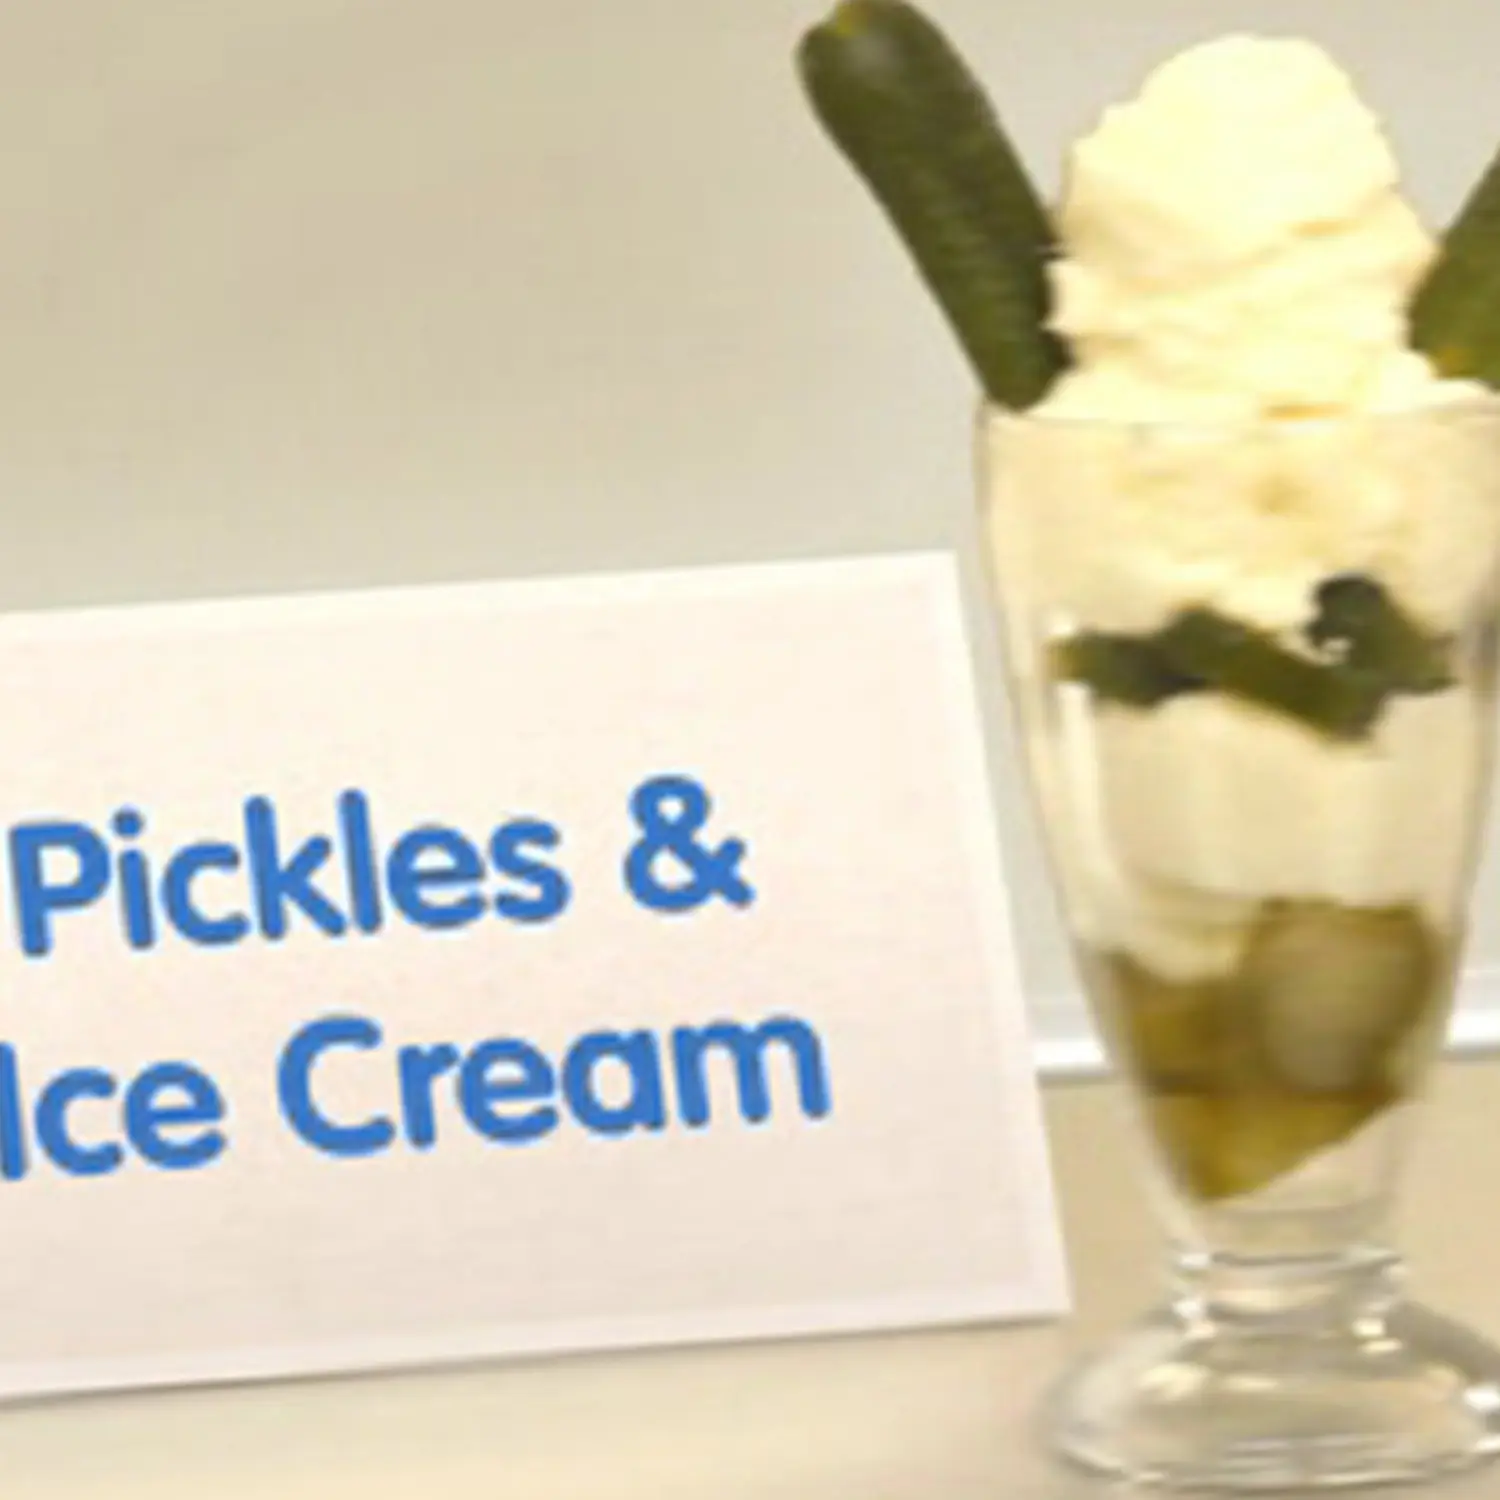 Pickles & ice cream 